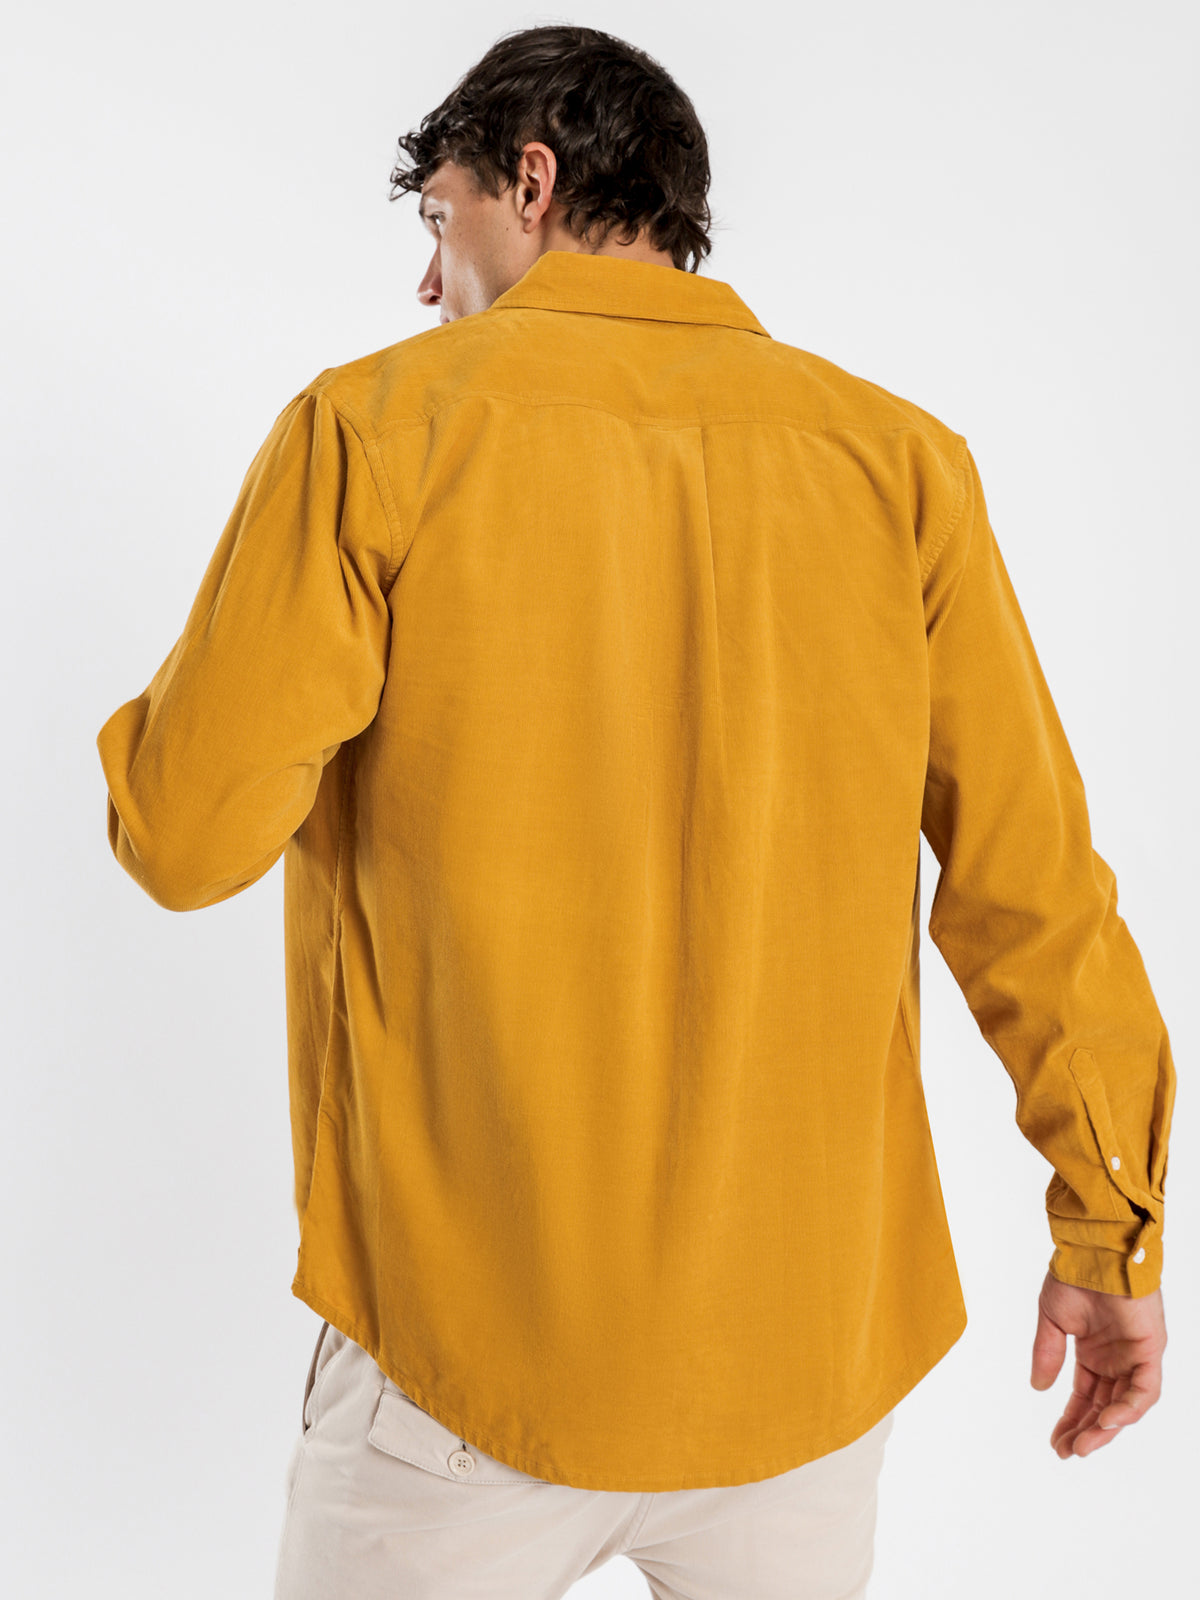 Axel Cord Long Sleeve Shirt in Mustard